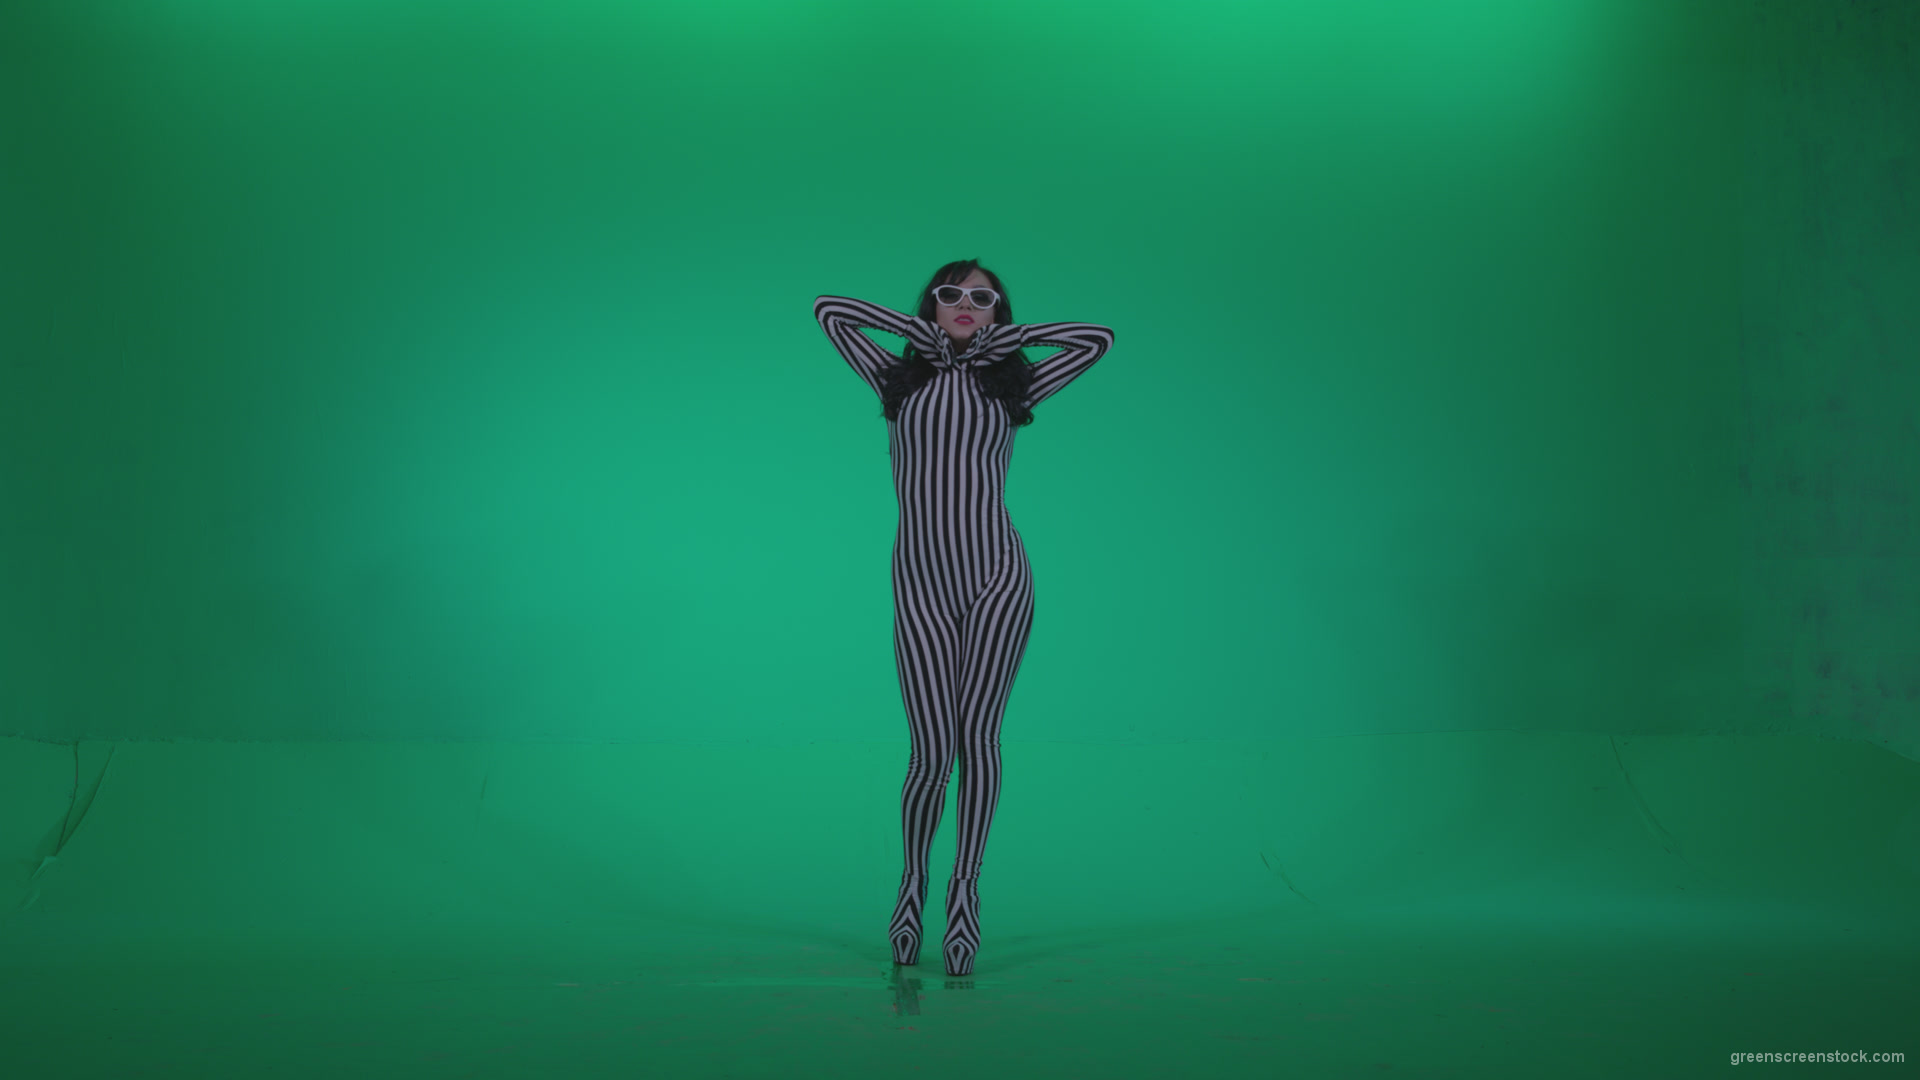 Go-go-Dancer-White-Stripes-s7-Green-Screen-Video-Footage_001 Green Screen Stock